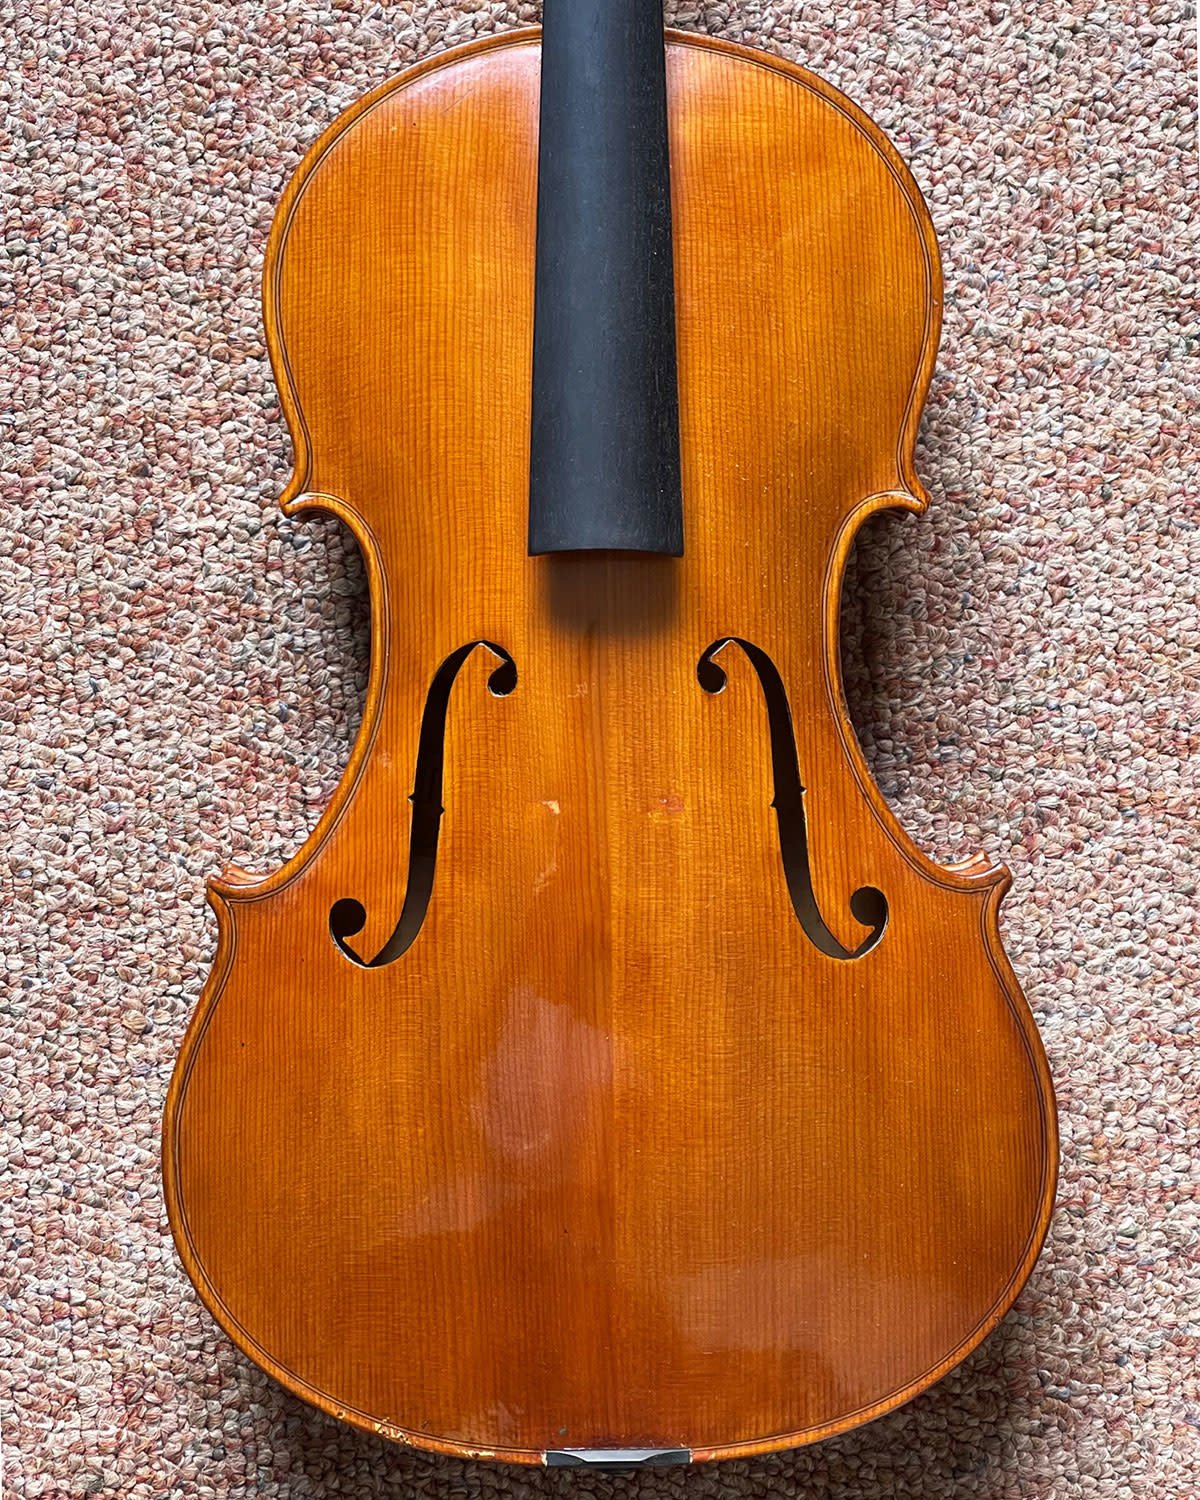 Wm. & Loid Tennison 16.75" Tertis model viola, 1955, Ft. Worth Texas, USA